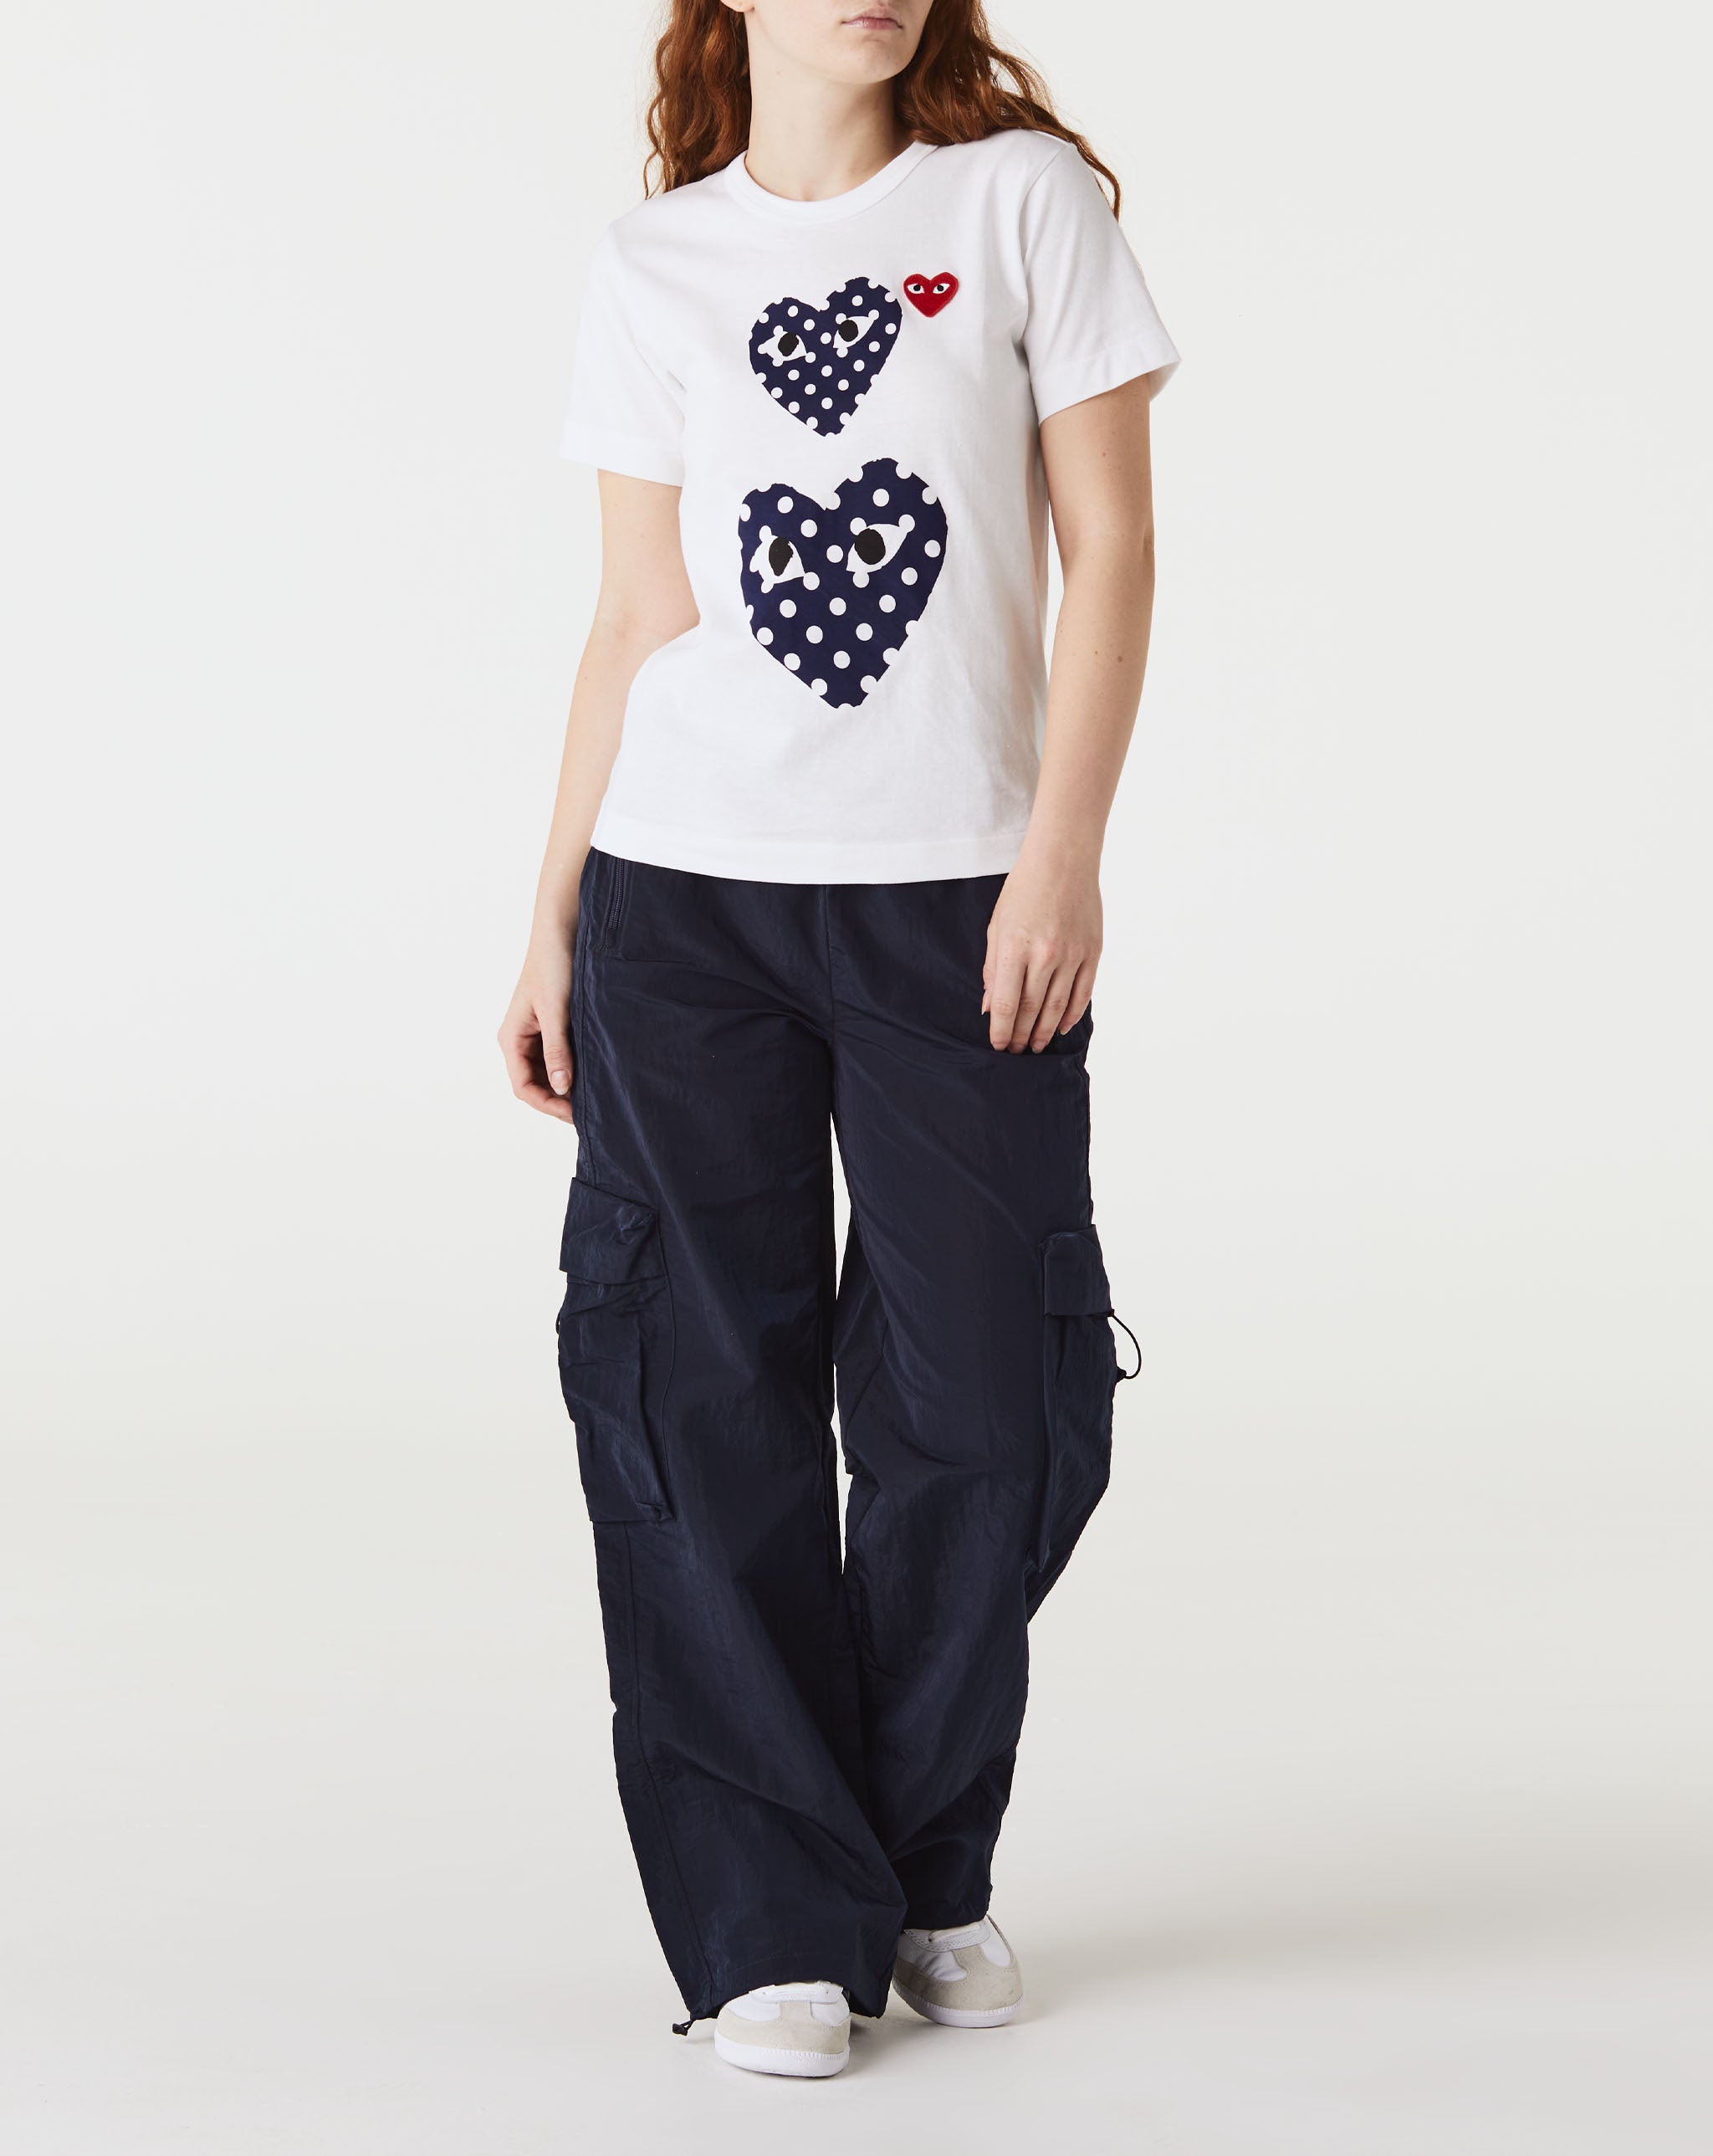 Comme des Garcons PLAY Women's Double Polka Dot Heart T-Shirt  - Cheap Atelier-lumieres Jordan outlet